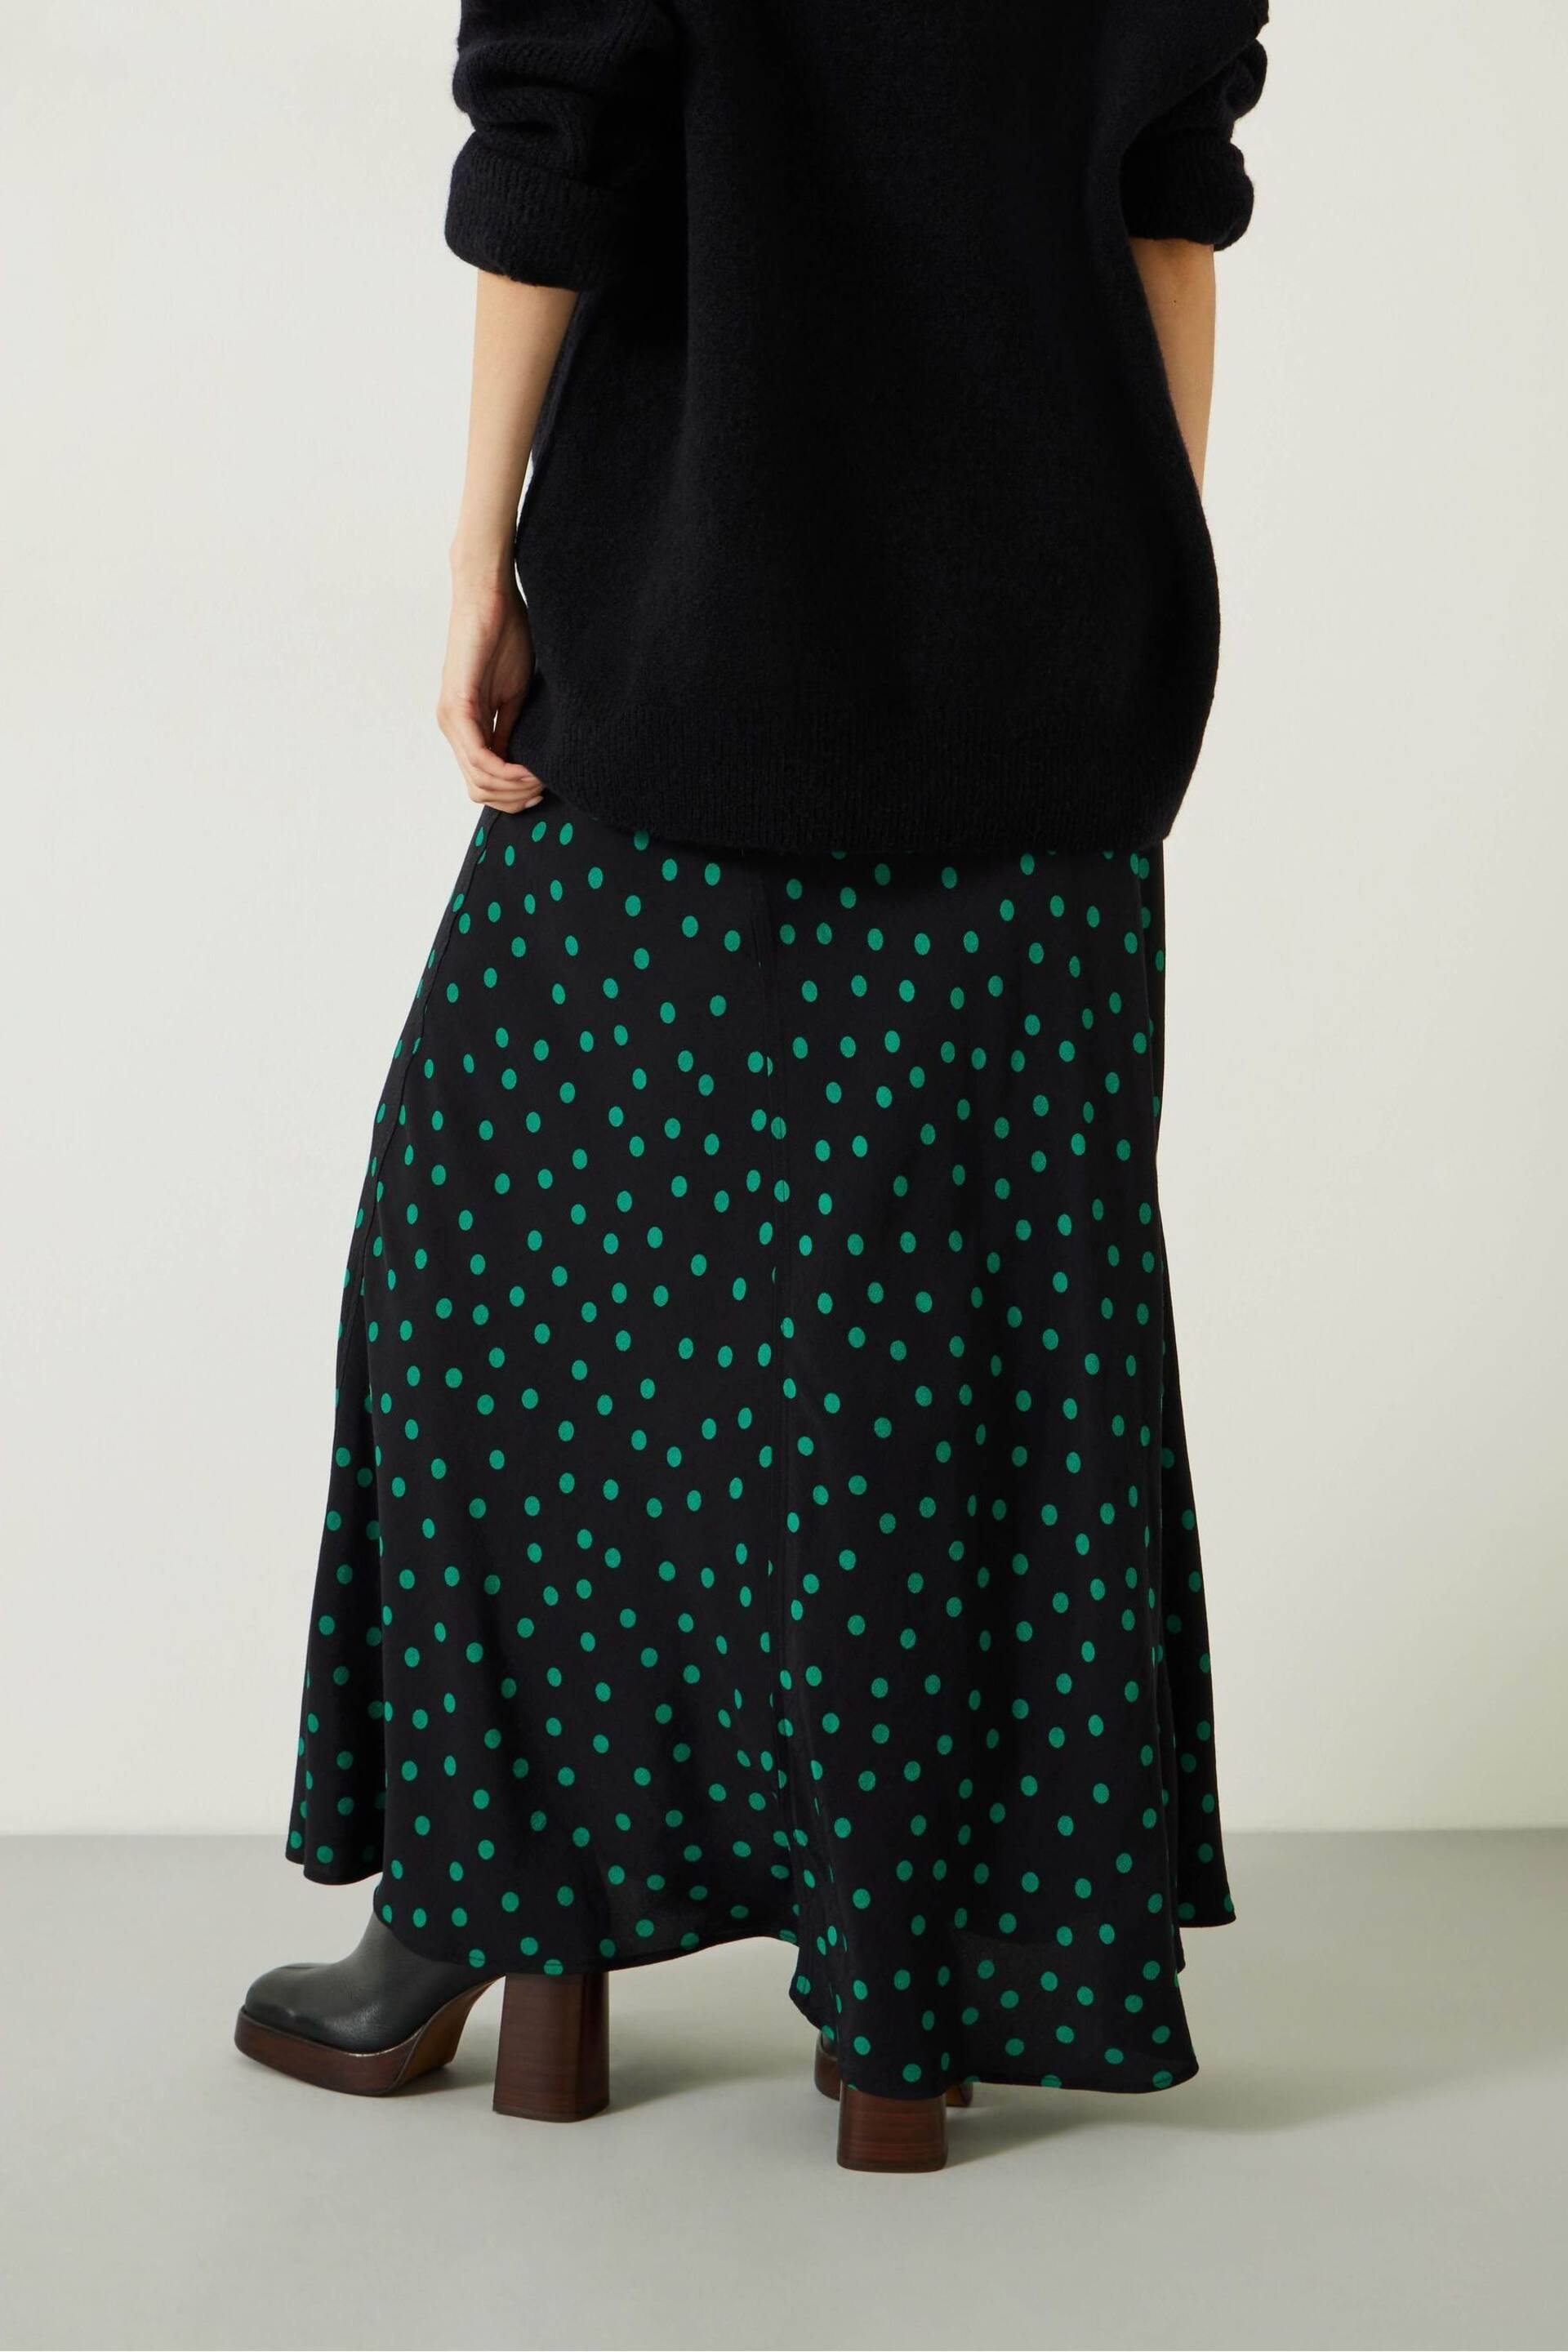 Hush Green Katie Maxi Skirt - Image 3 of 5